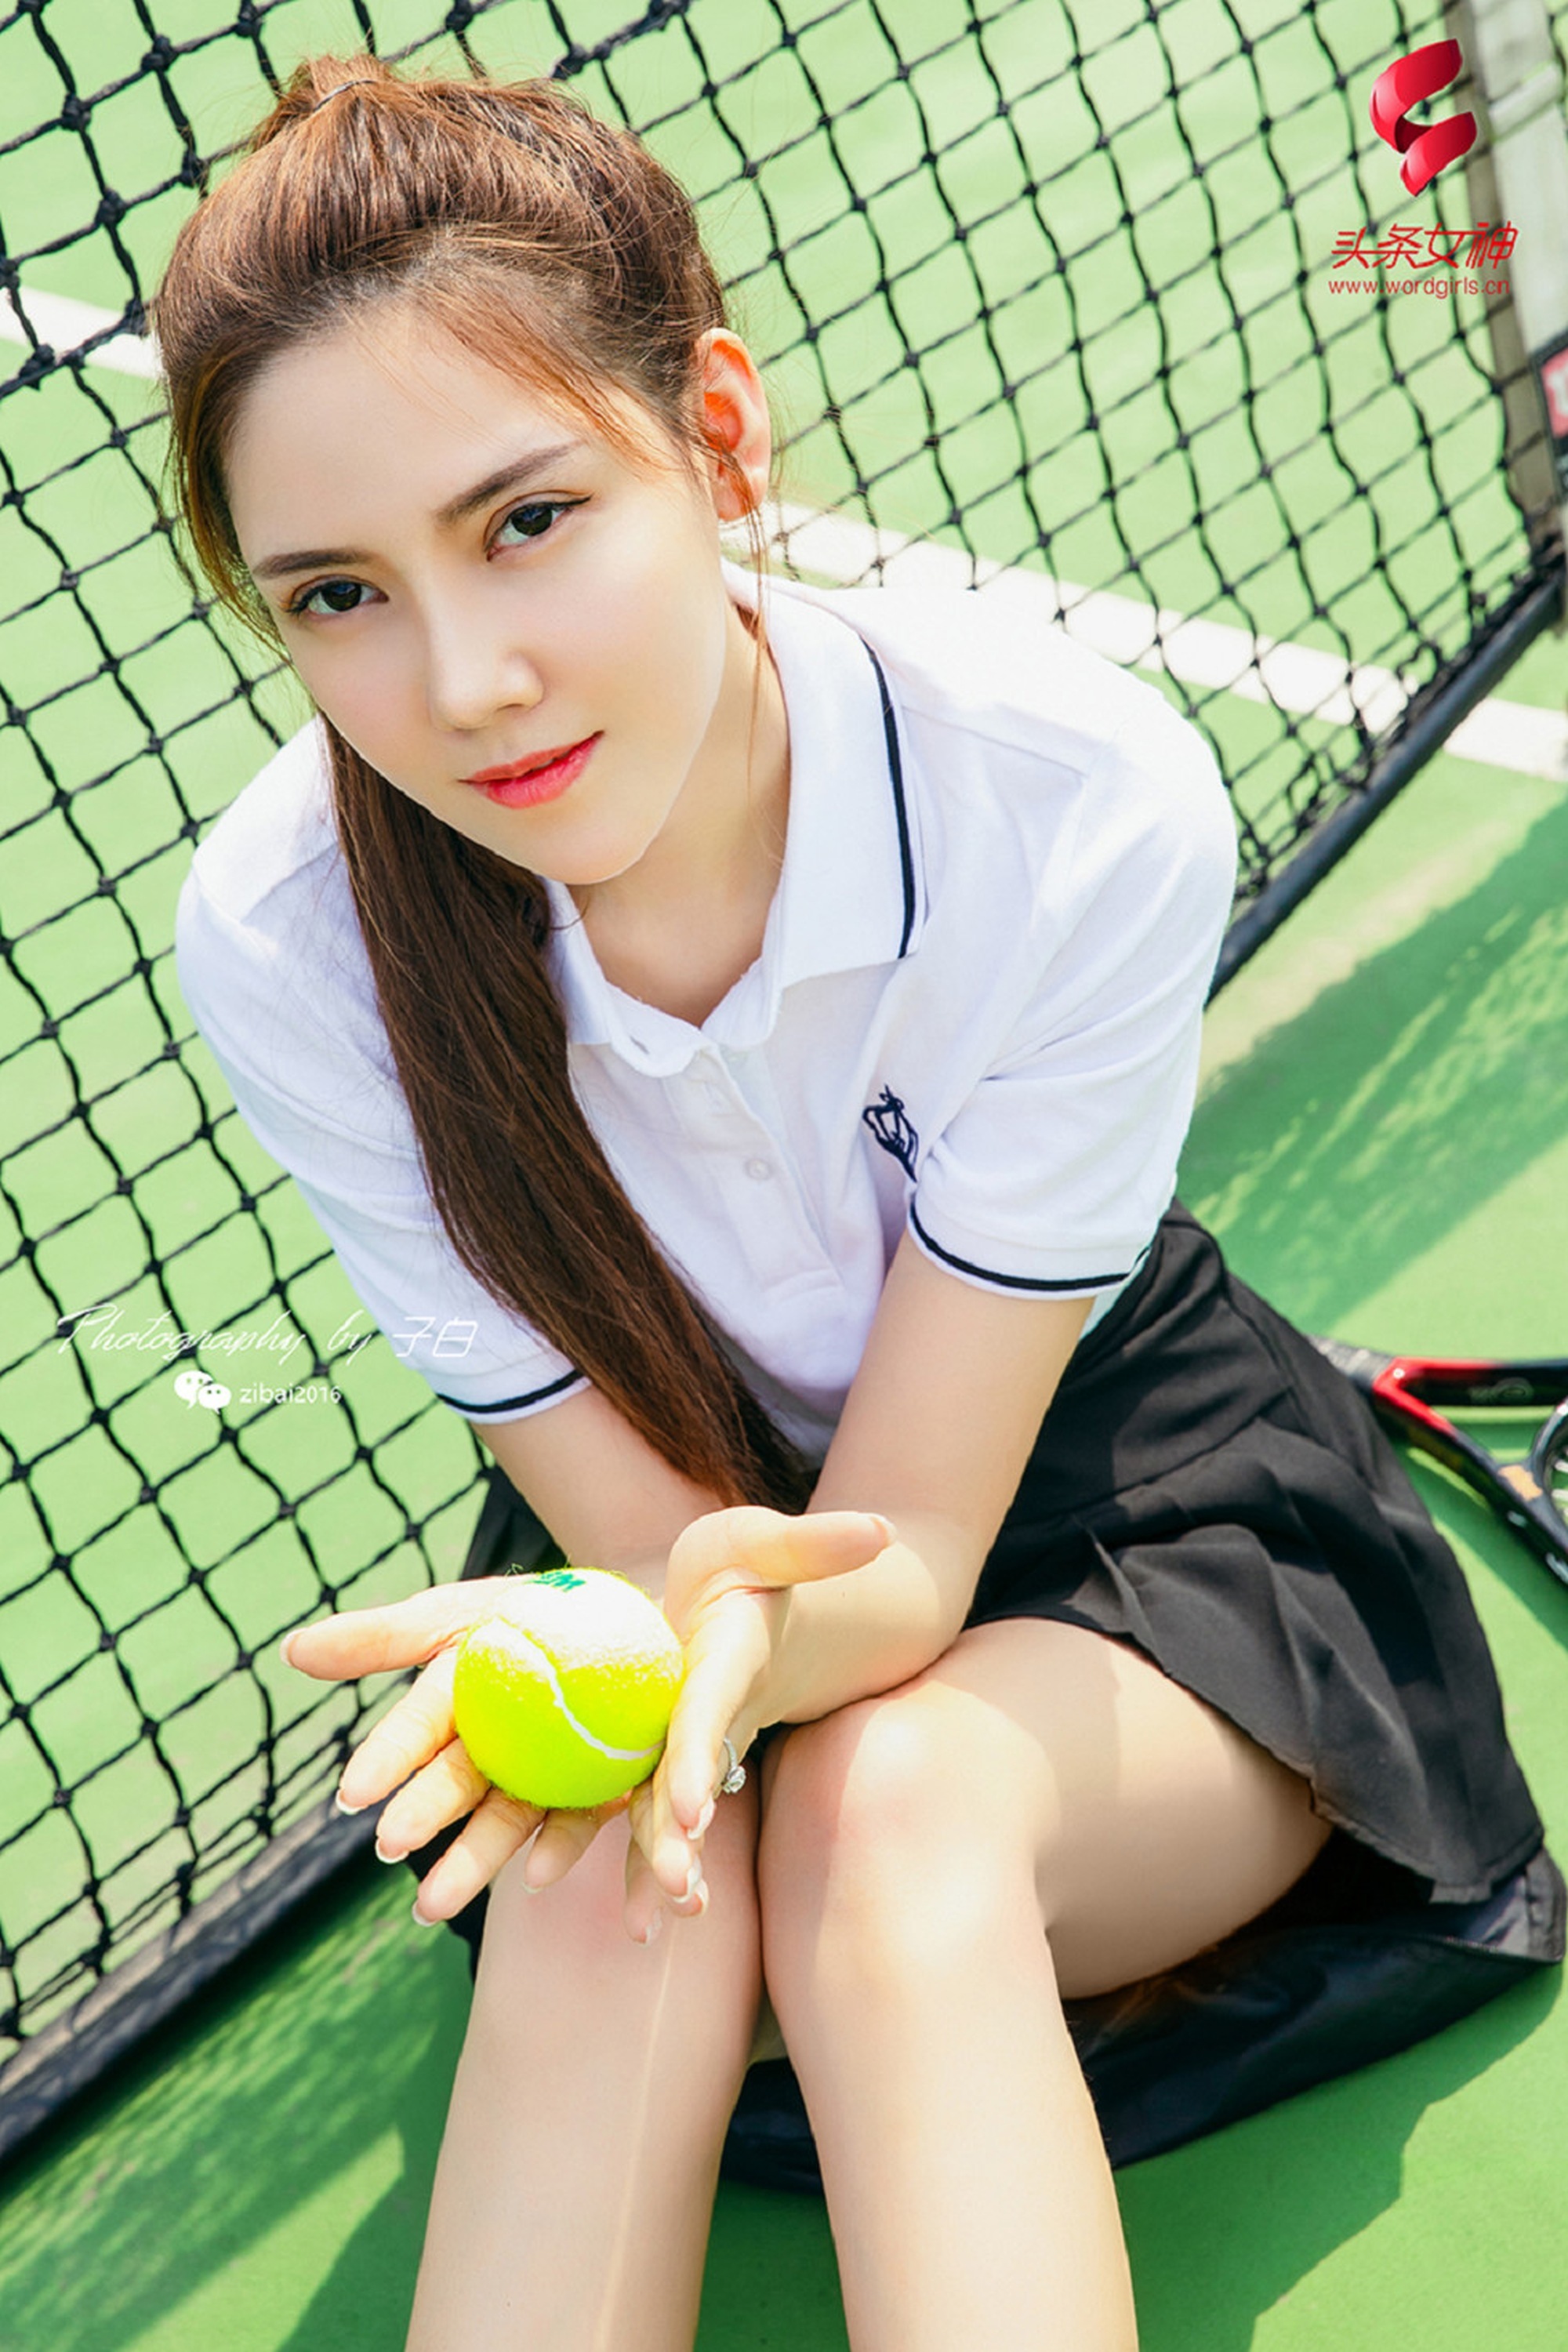 Toutiao headline goddess July 13, 2019 Sharon I'm a beautiful girl in tennis